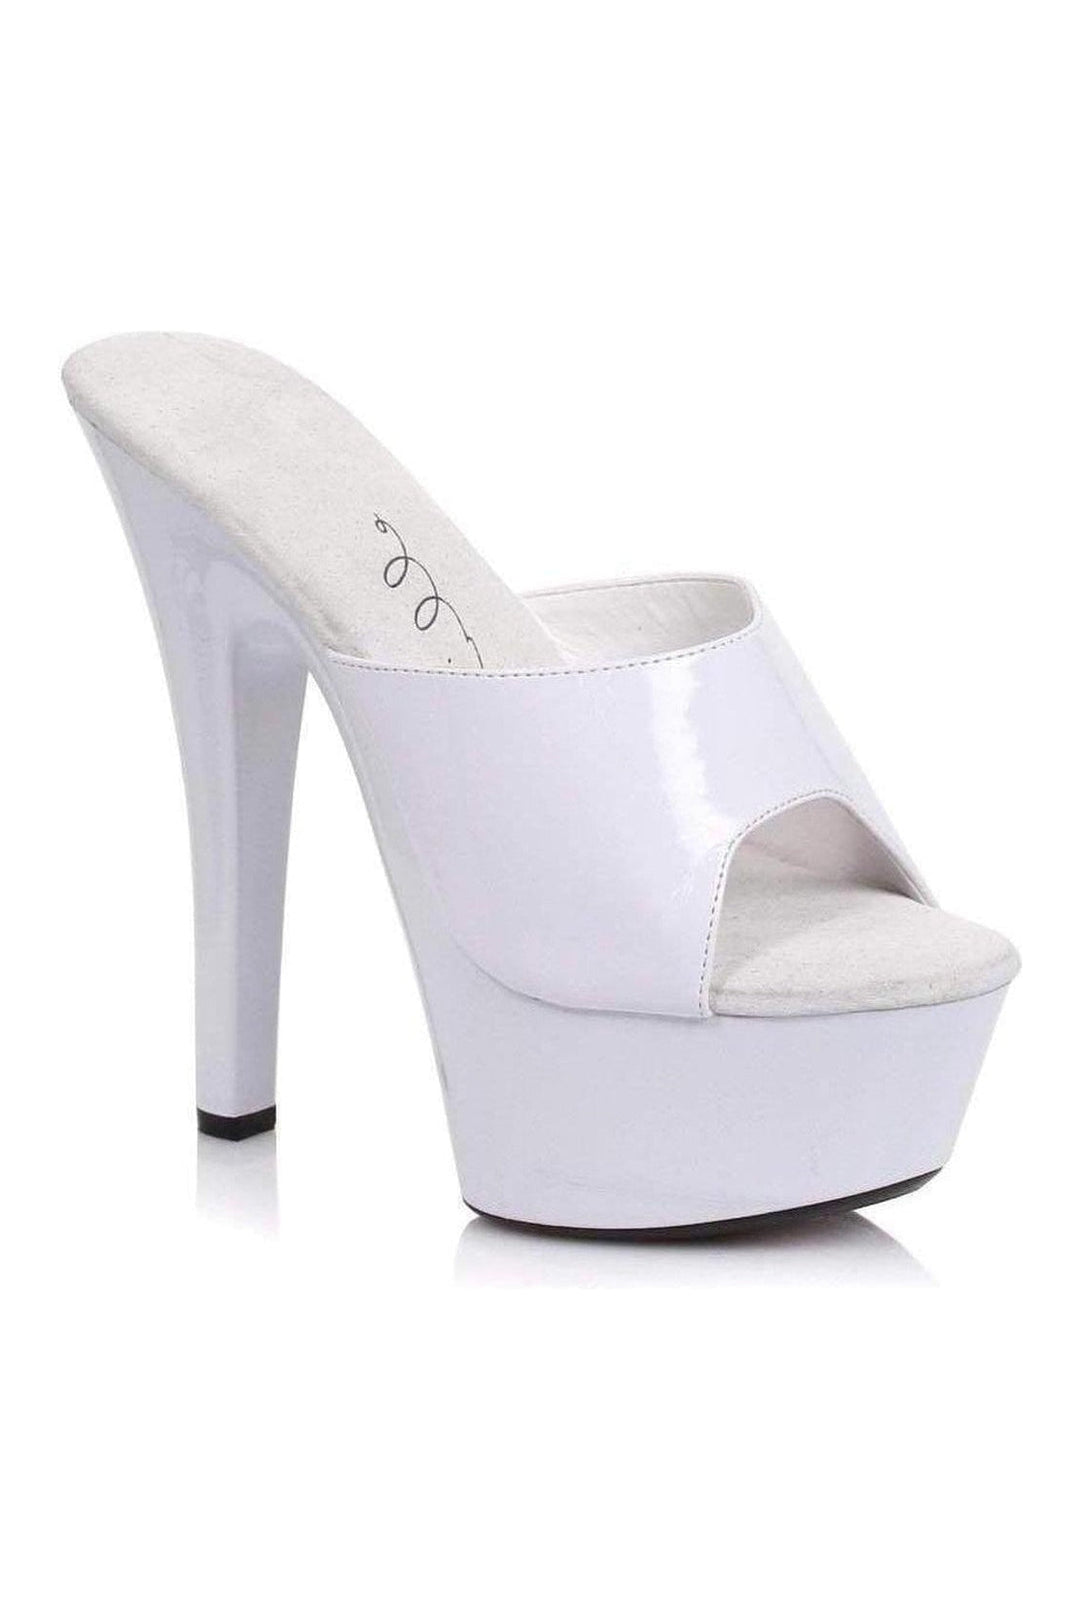 601-VANITY Platform Slide | White Patent-Ellie Shoes-White-Slides-SEXYSHOES.COM